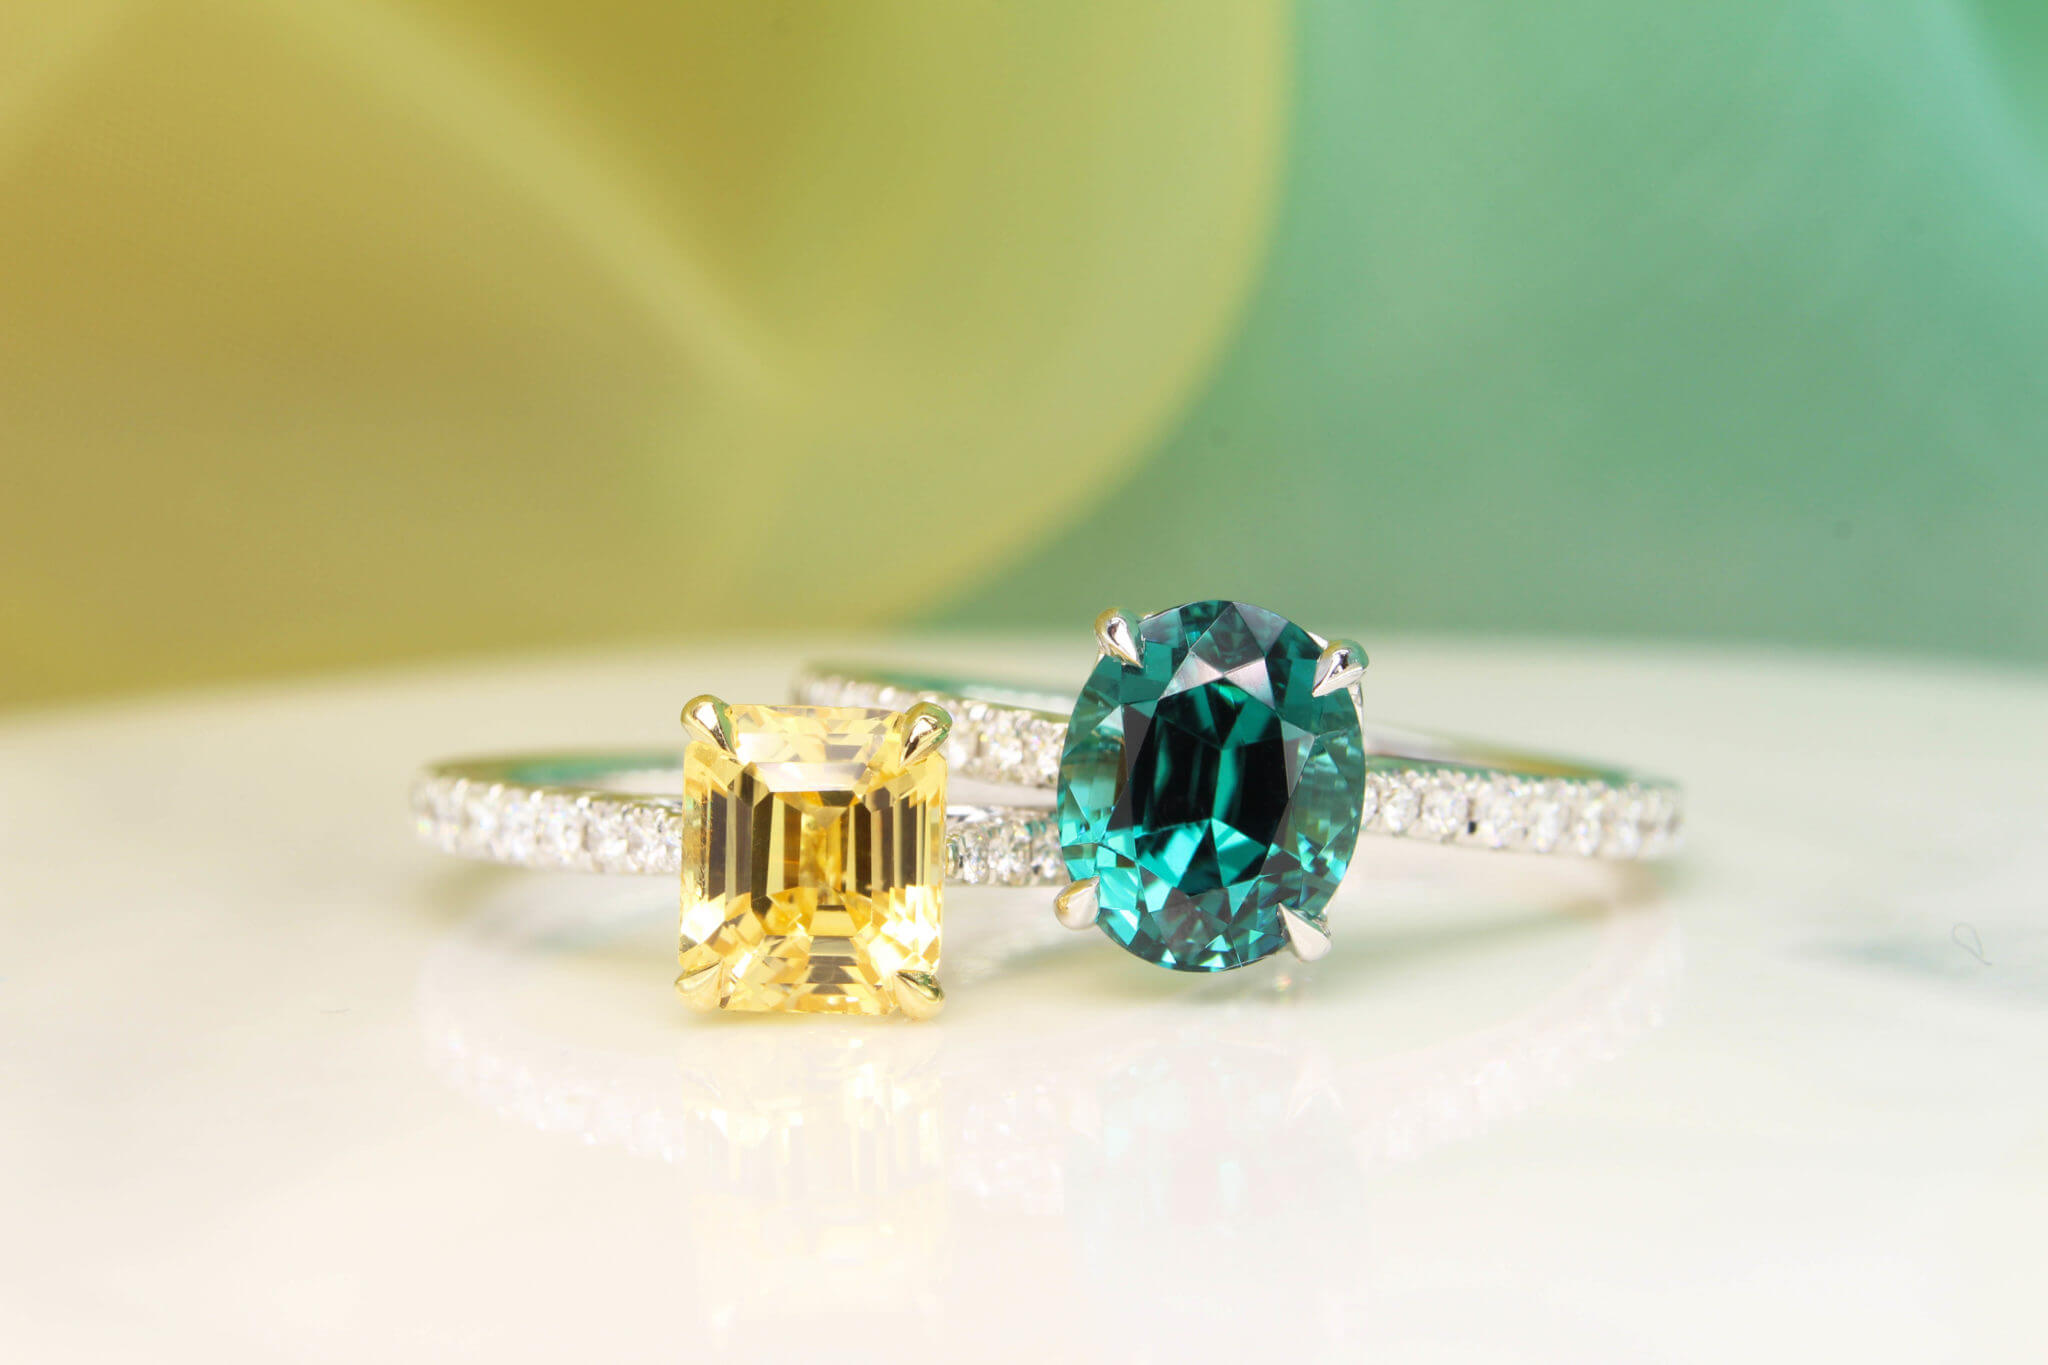 Customised Engagement Proposal Ring with Tourmaline Stone